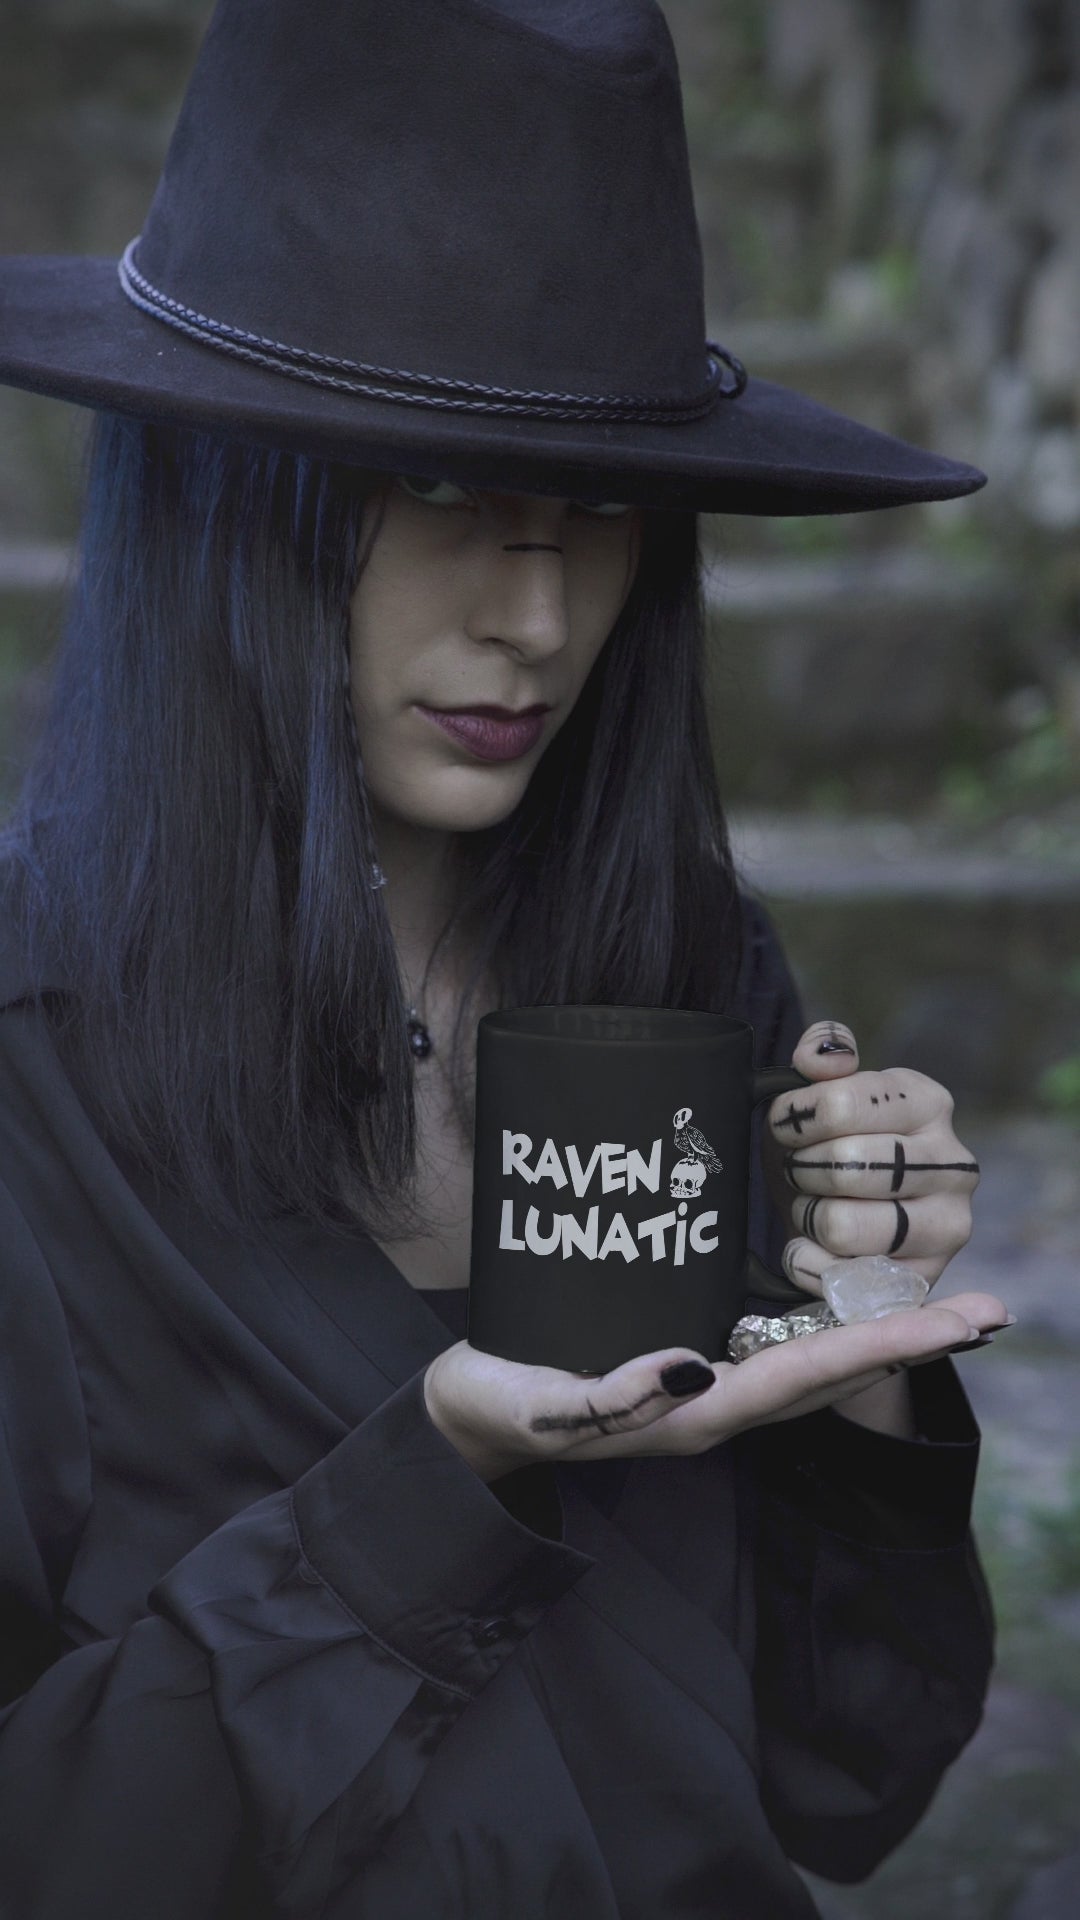 Raven Lunatic Mug